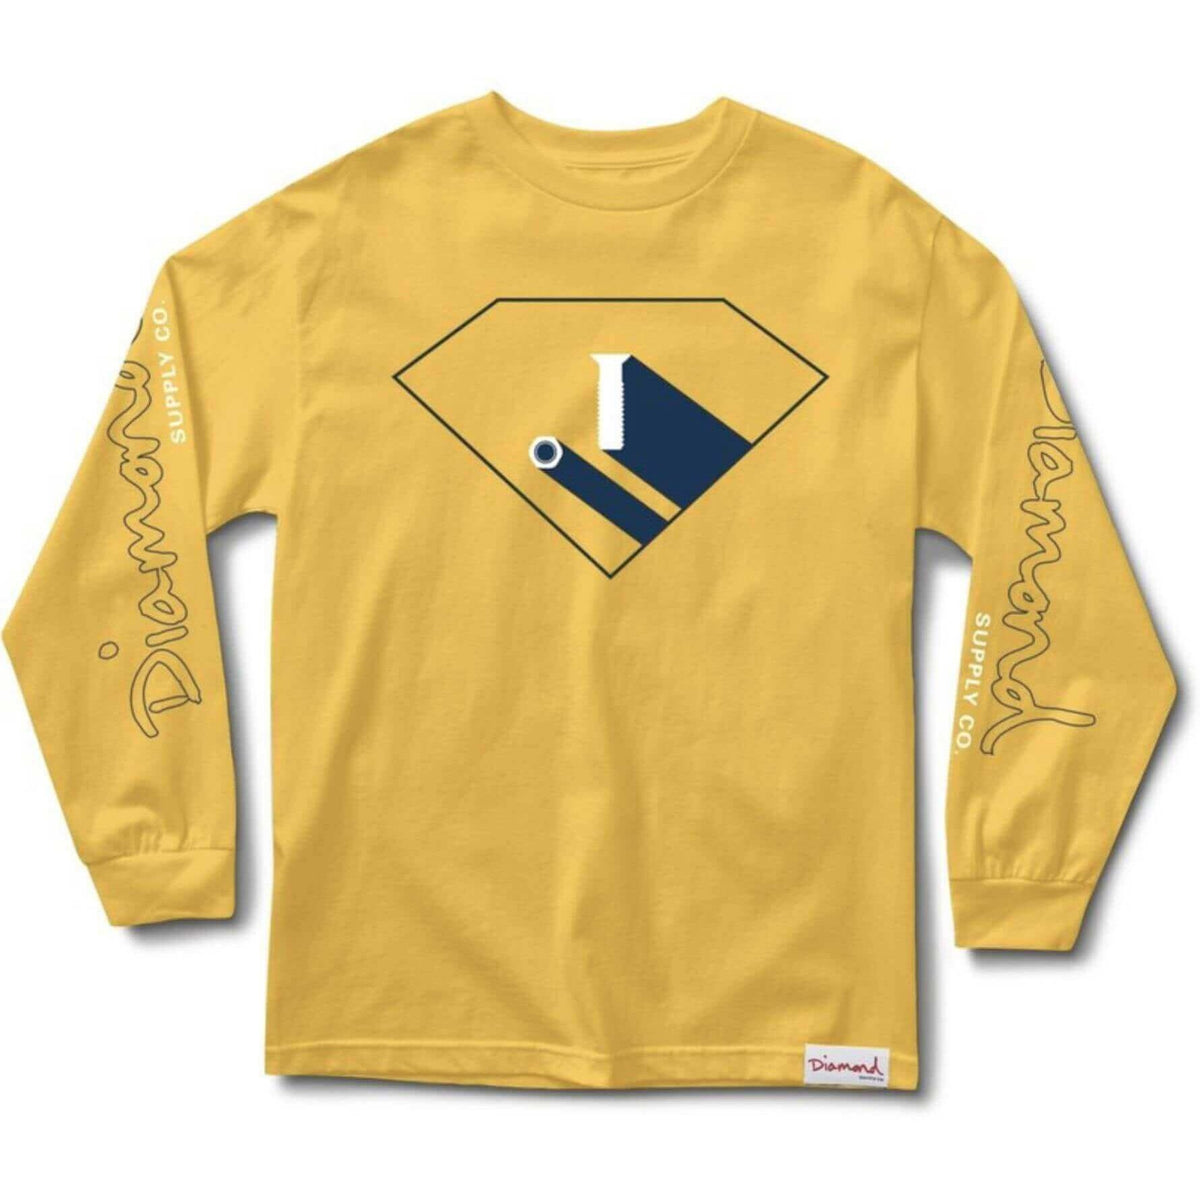 Diamond Supply Co. Industry Standard Long Sleeve T-Shirt Gold